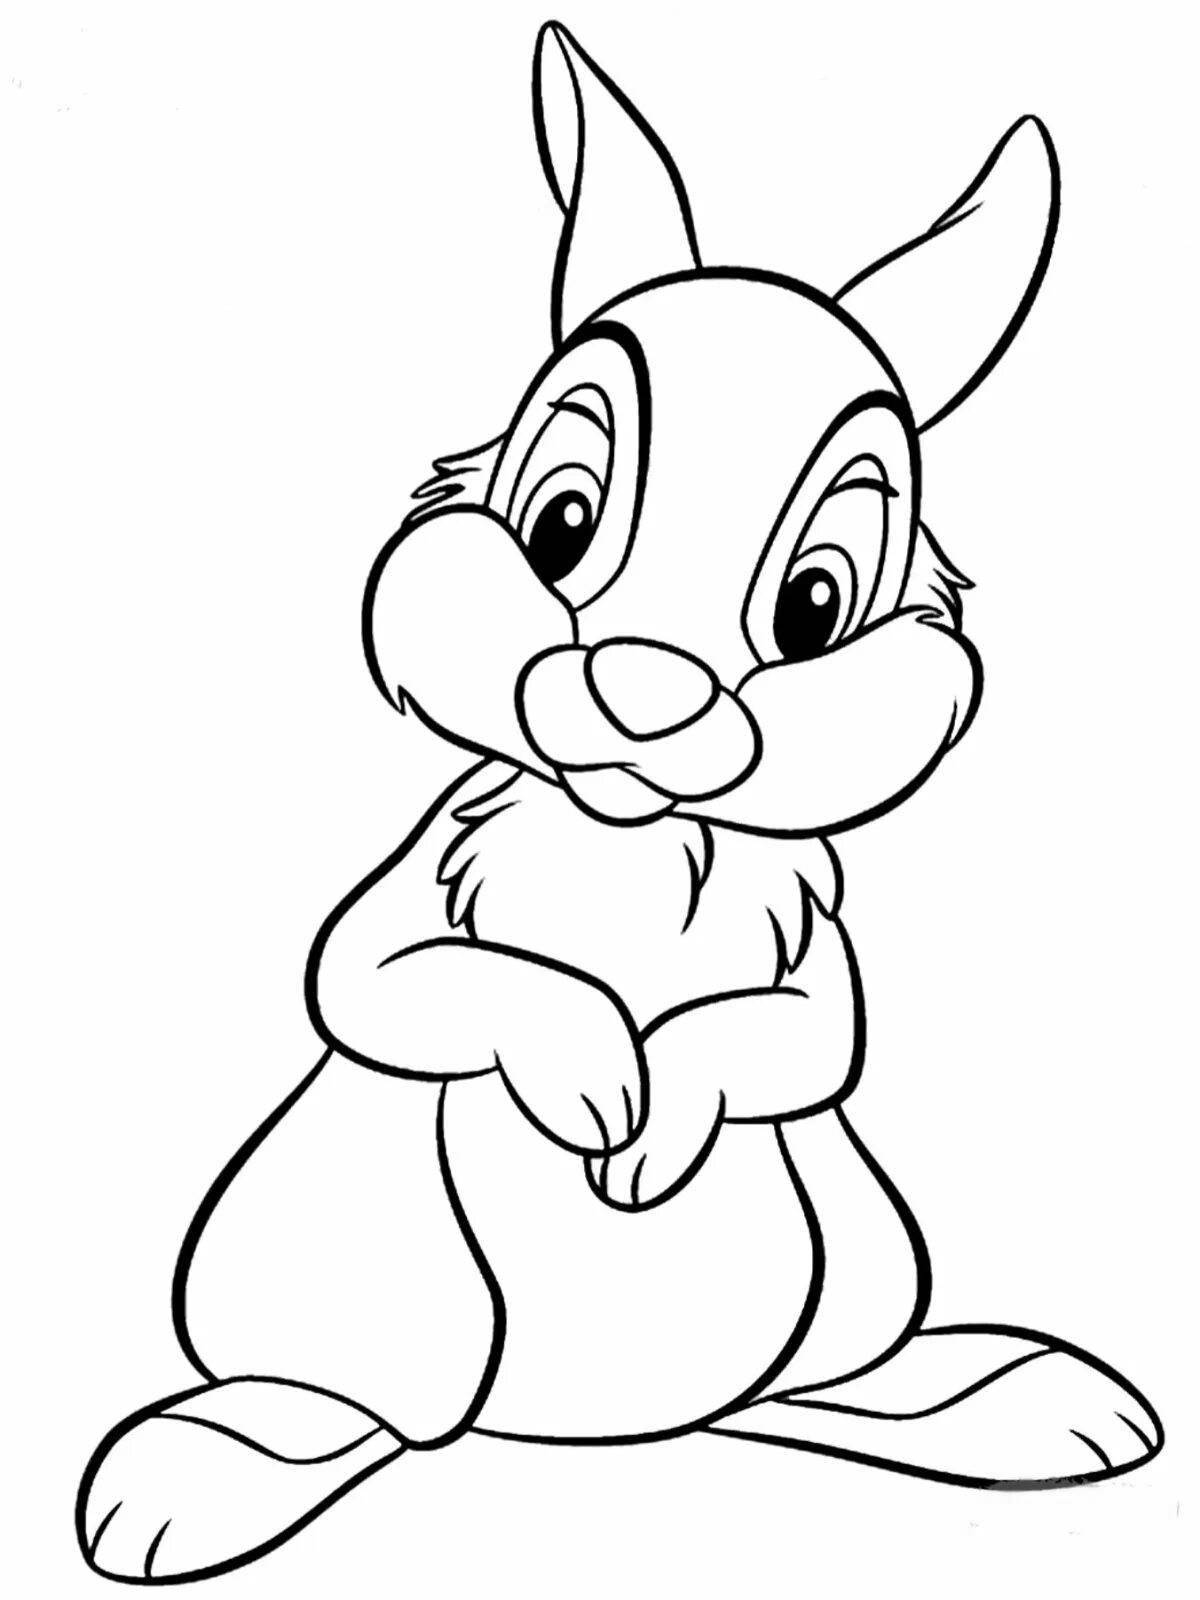 Раскраска ушастый мультяшный кролик